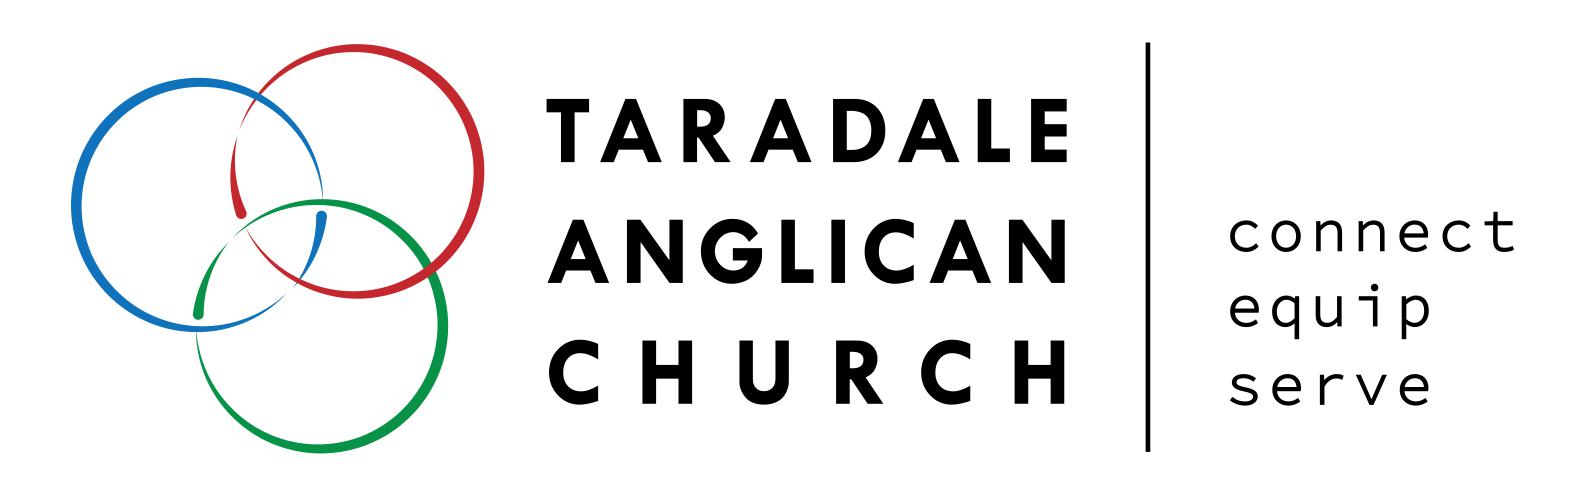 Taradale Anglican Church Logo